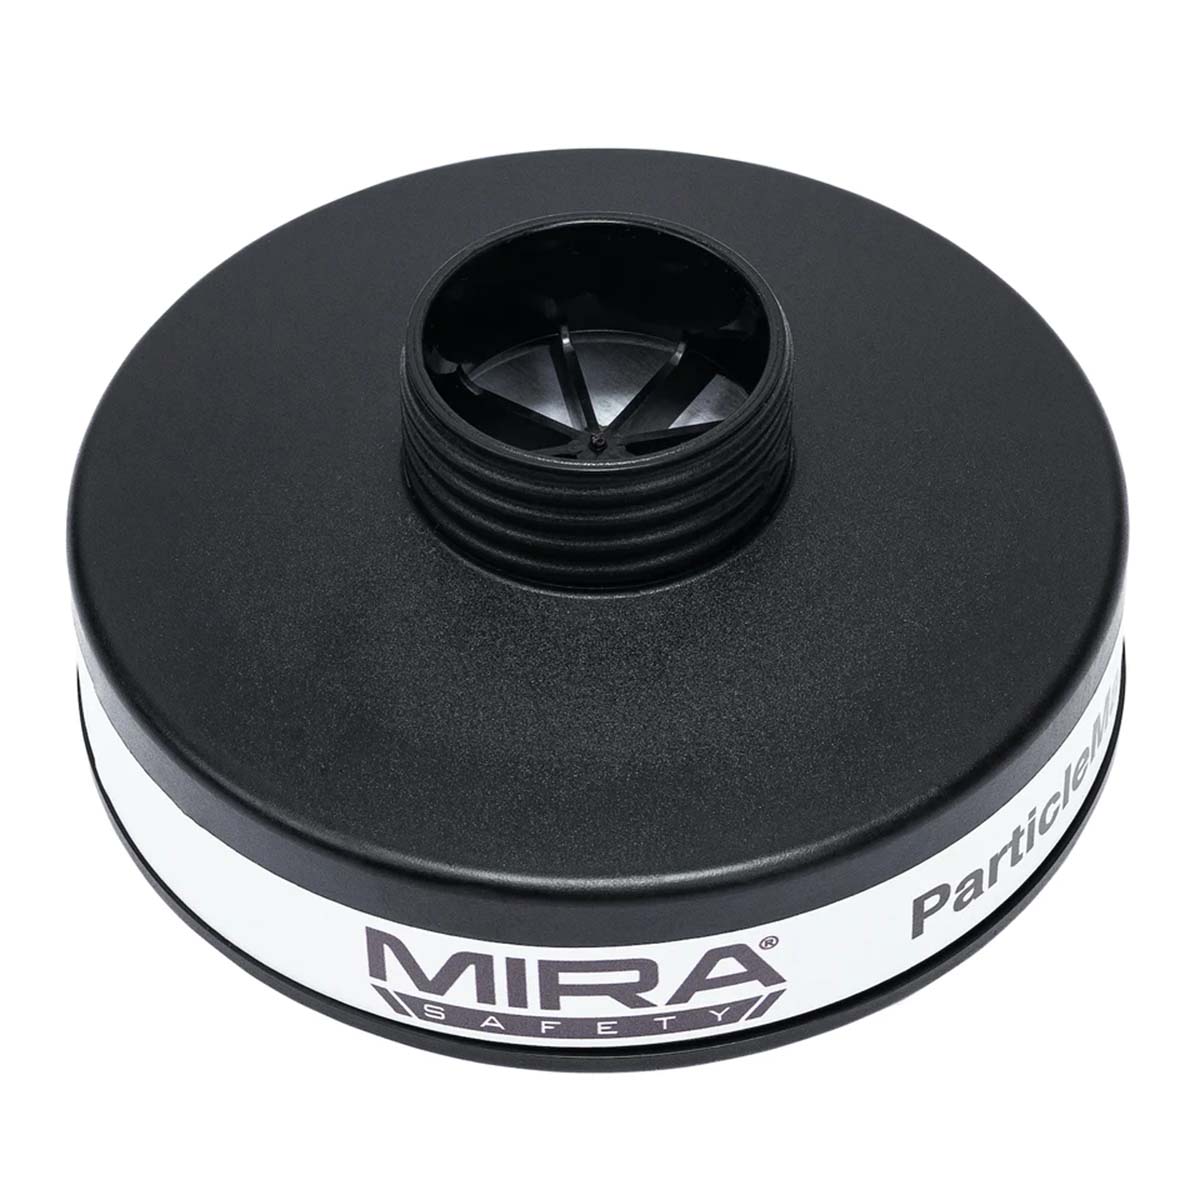 Mira Safety ParticleMax P3 Virus Filter Catridge 6 Pack